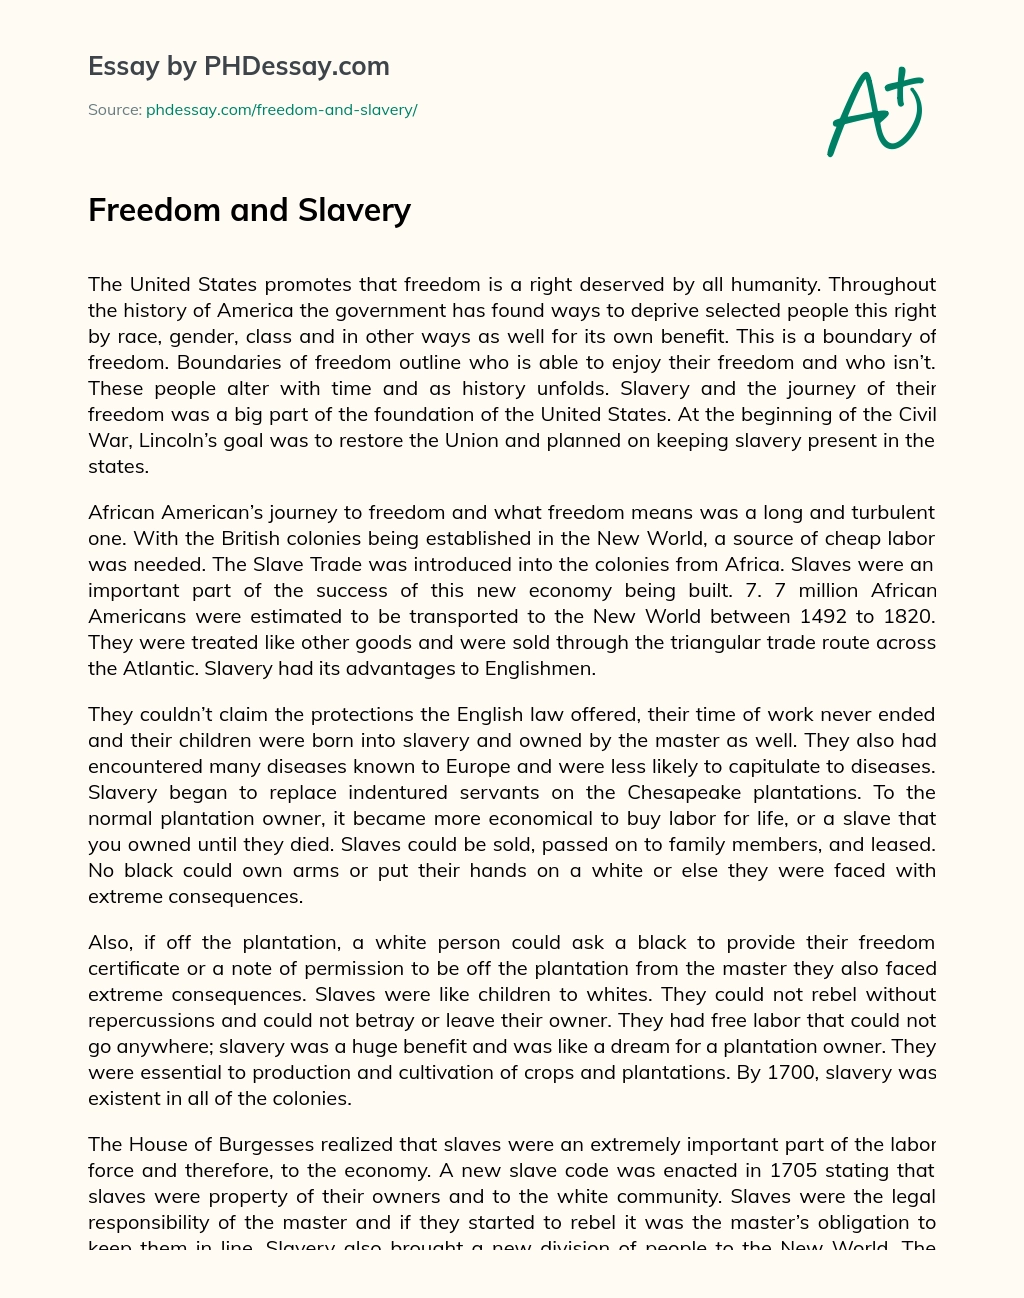 Freedom and Slavery essay